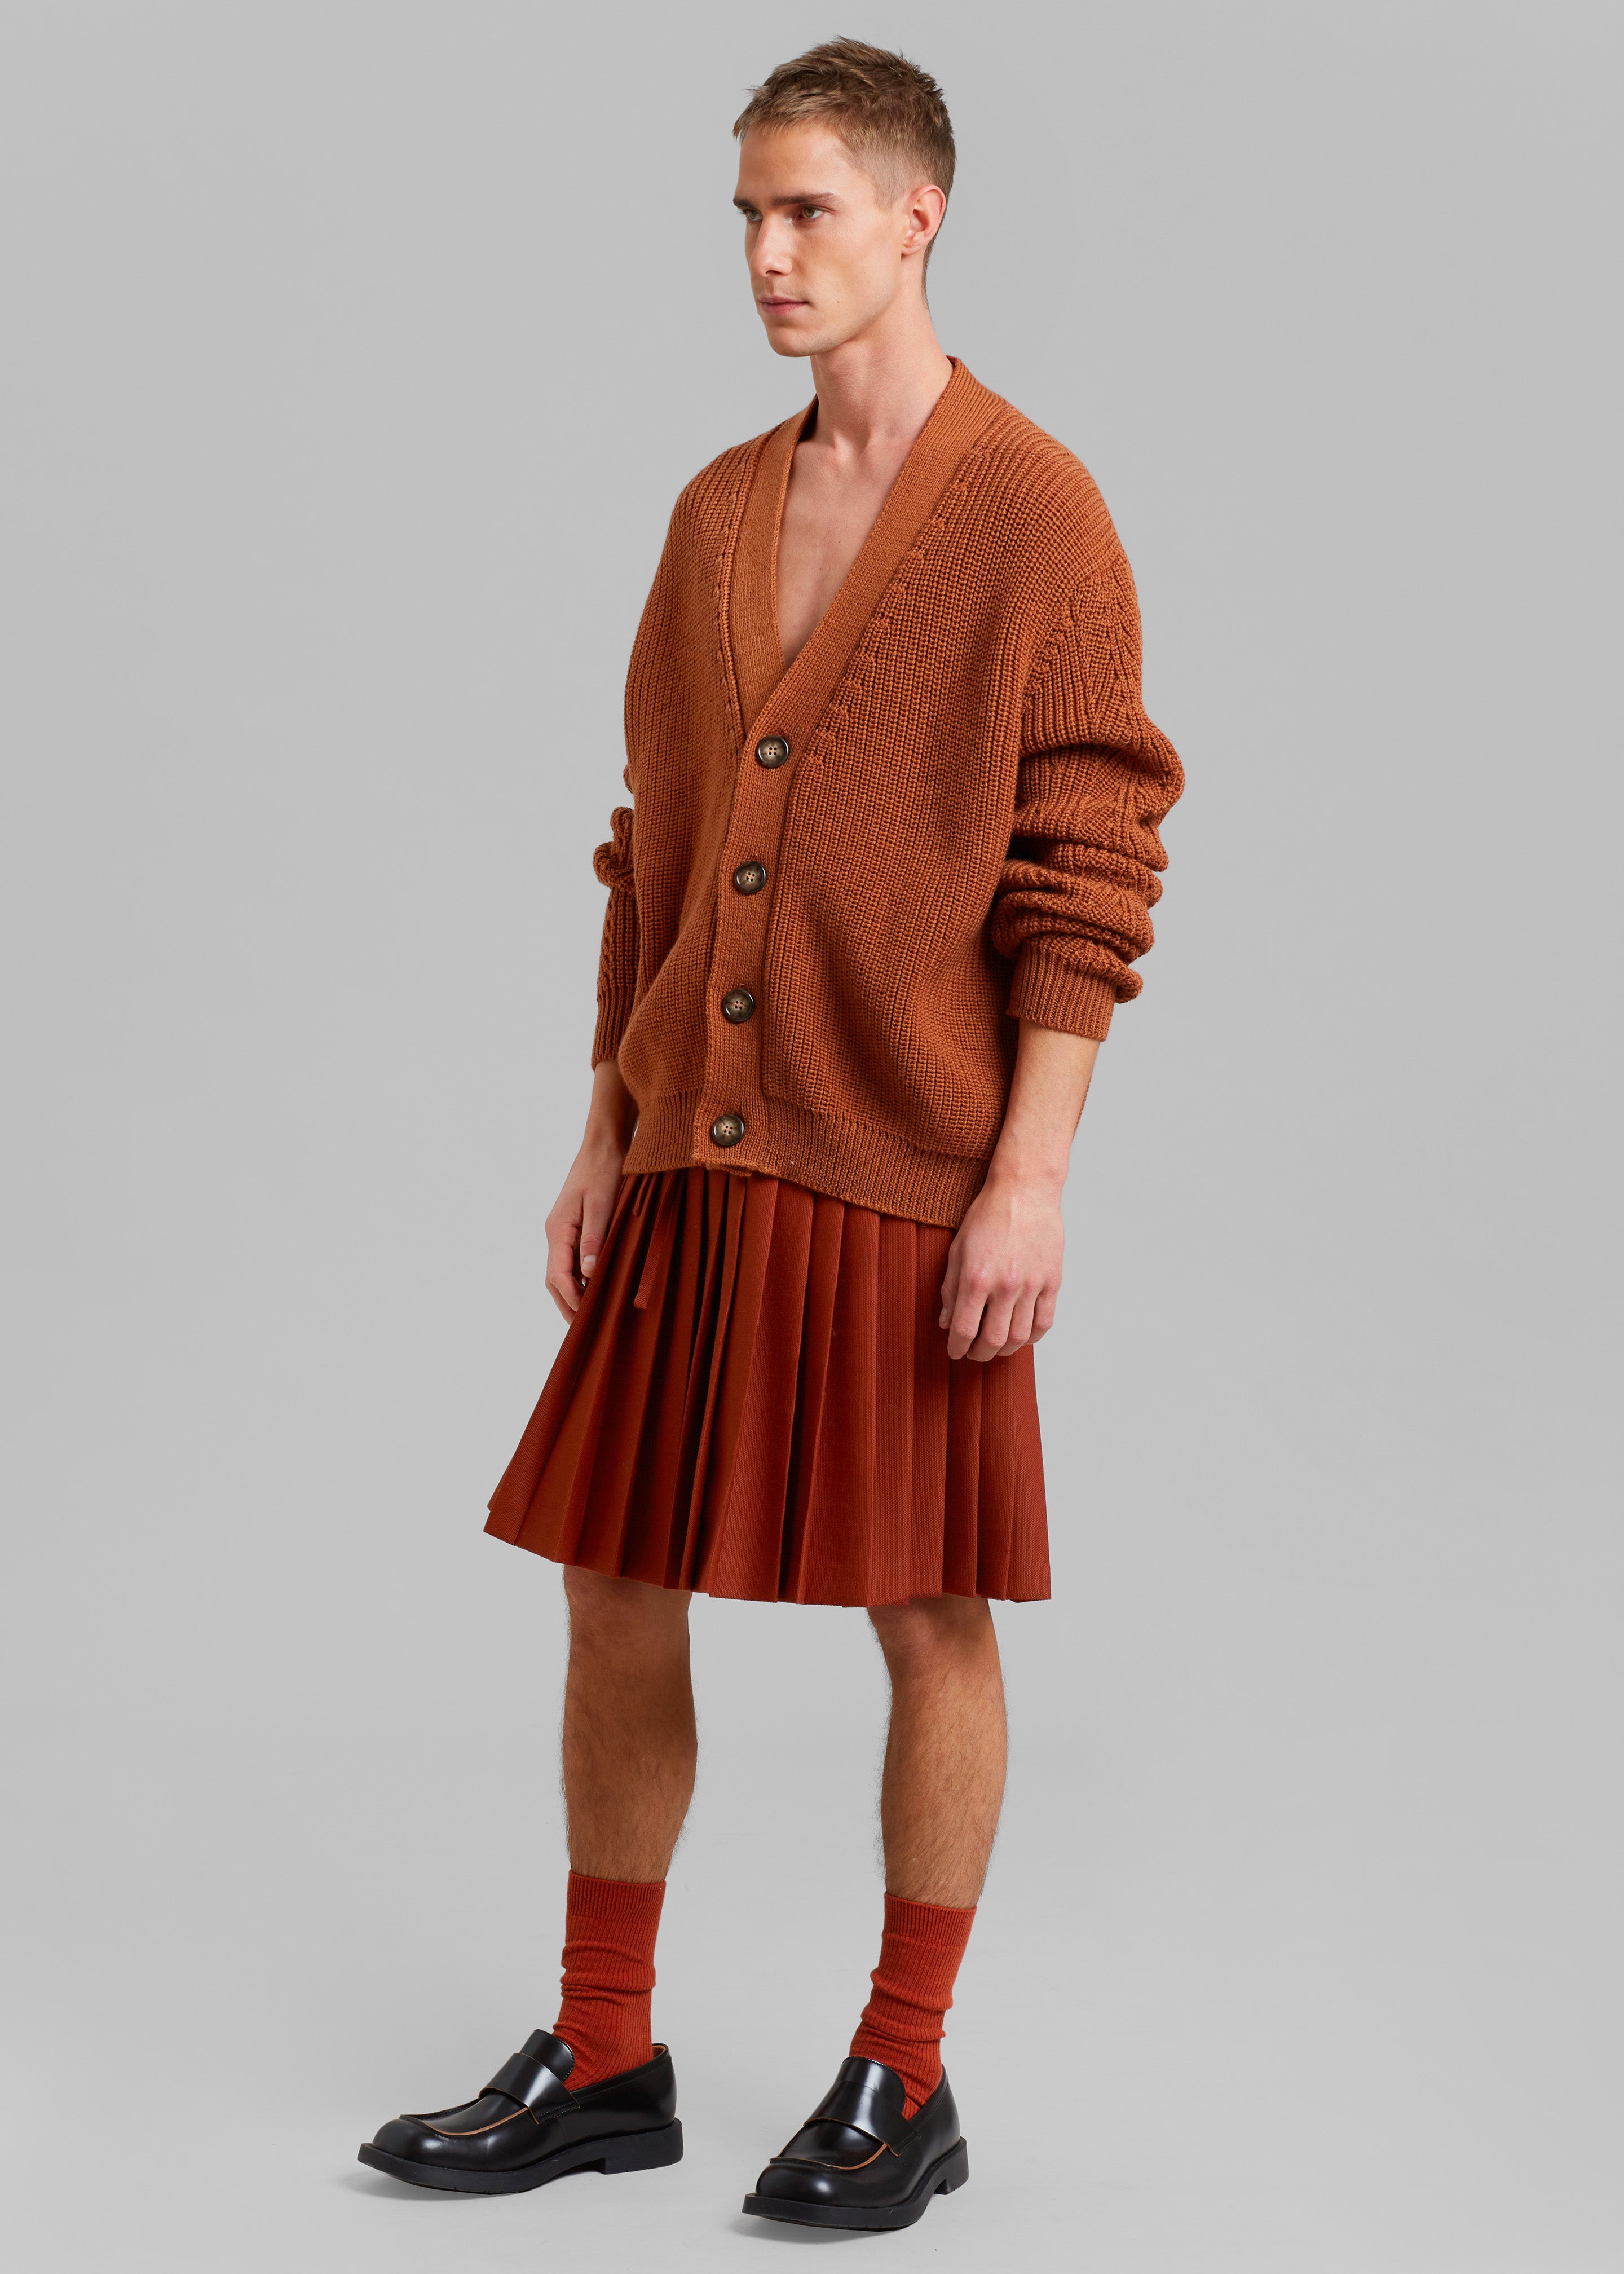 EGONLab Euphoria Skirt - Rust Wool - 4